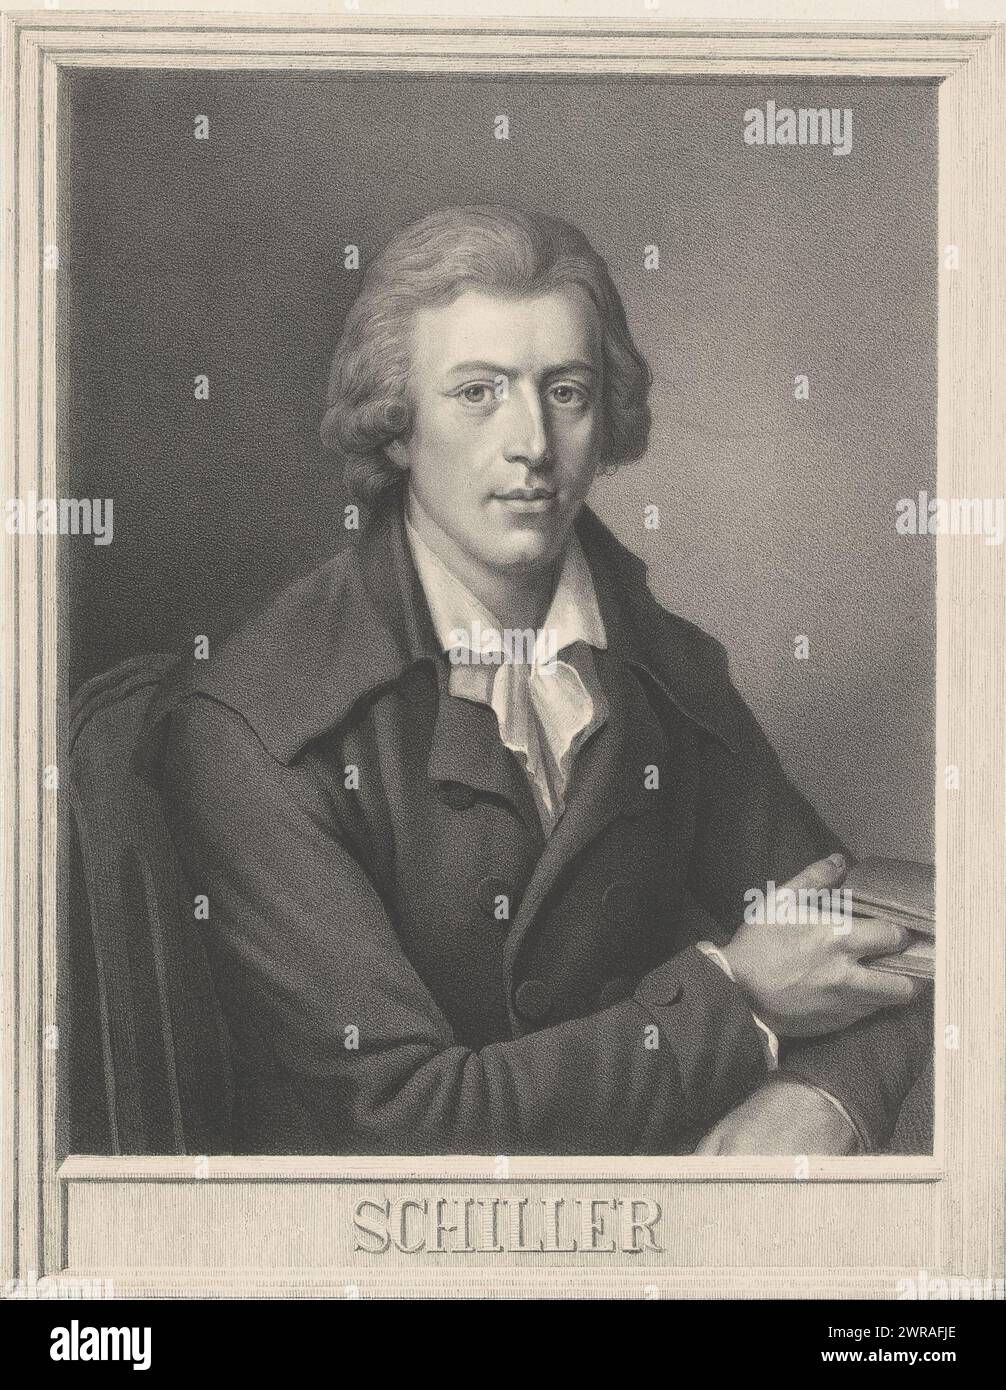 Portrait of Friedrich von Schiller, Schiller (title on object), print maker: Gustav Schlick, printer: J.G. Bach, 1814 - 1869, paper, height 583 mm × width 455 mm, print Stock Photo